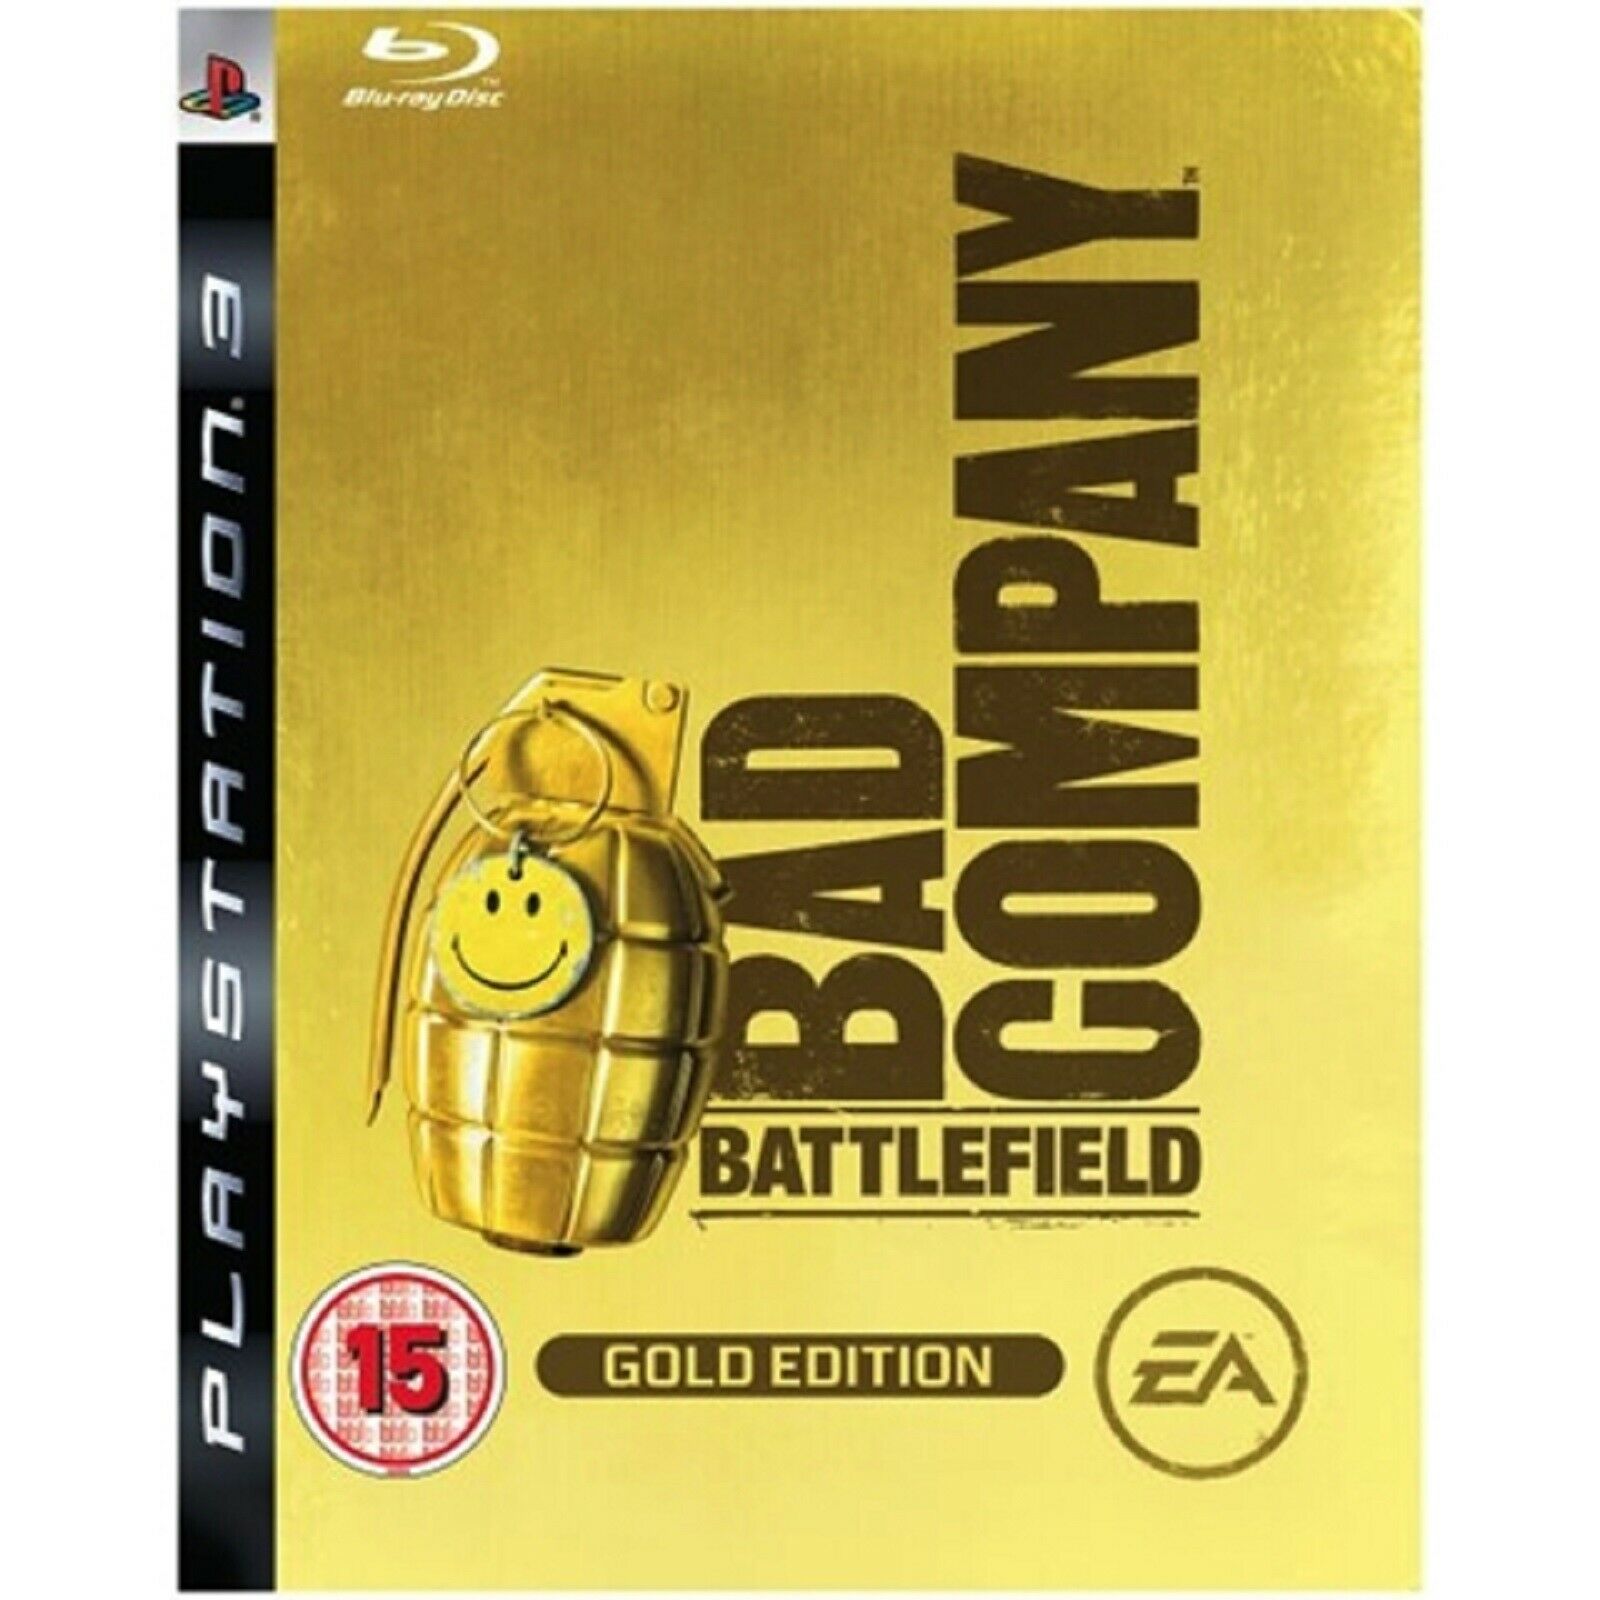 Battlefield Bad Company Gold Edition Steelbook